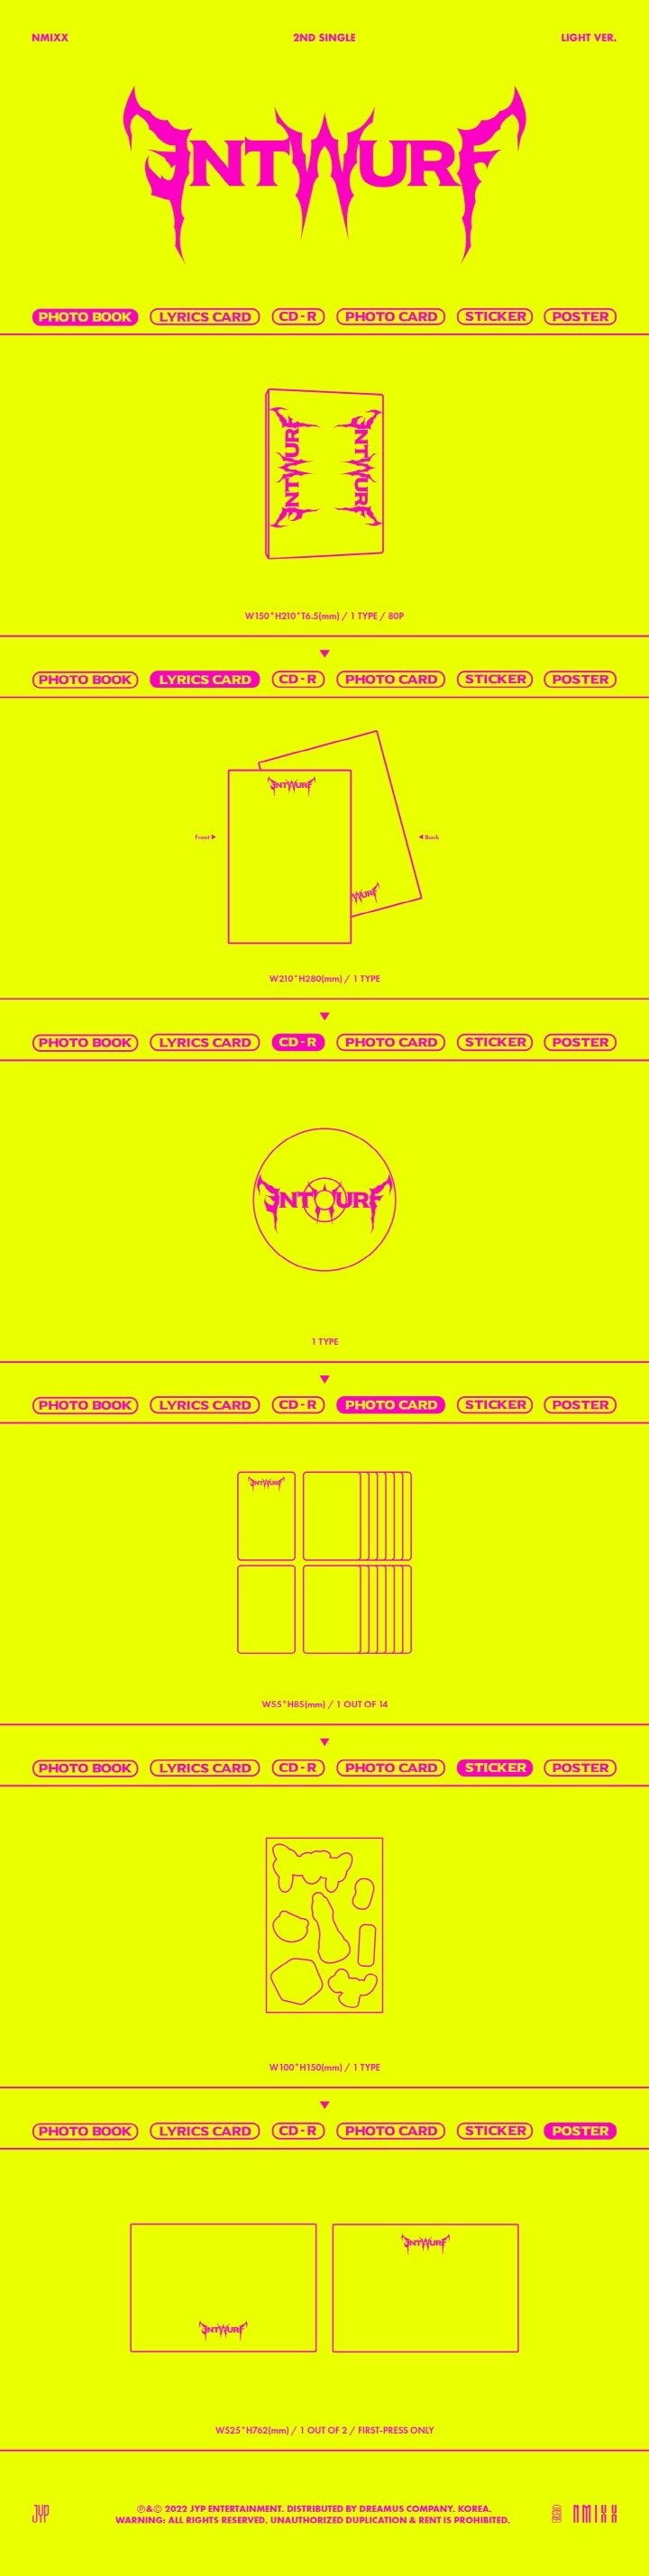 NMIXX - ENTWURF (الألبوم الثاني المنفرد) Light Ver.